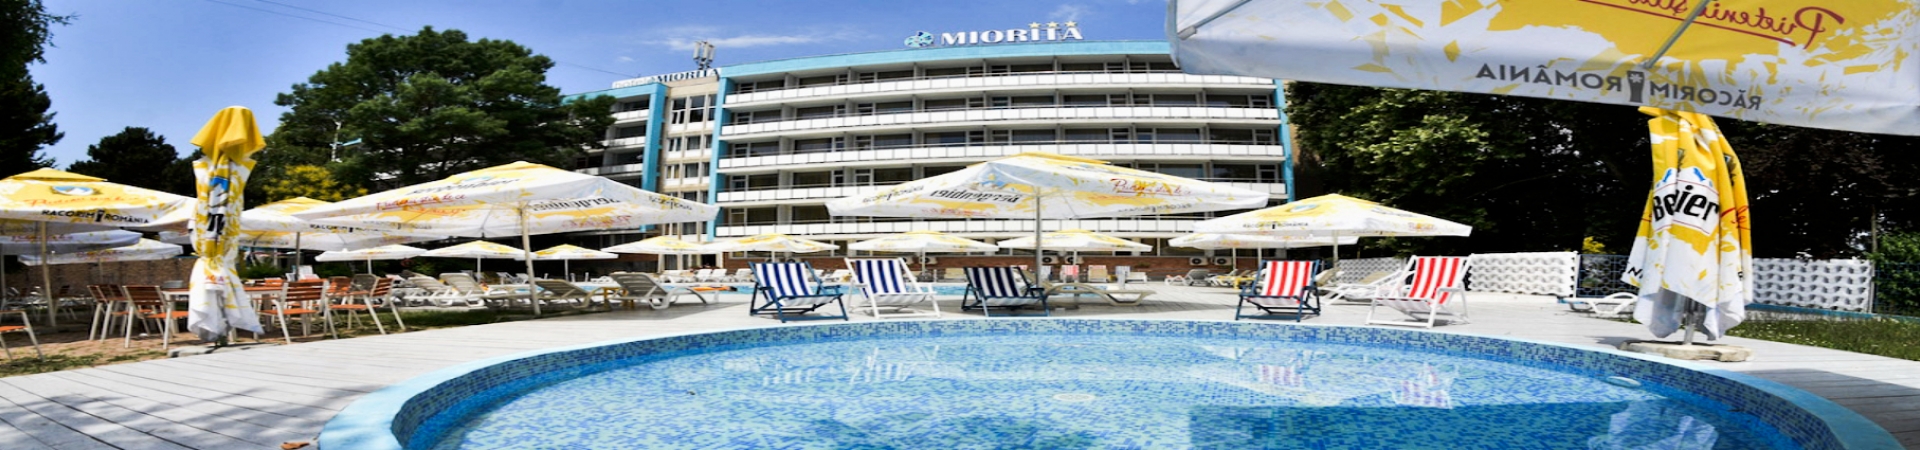 Hotel Miorita 3* - Neptun